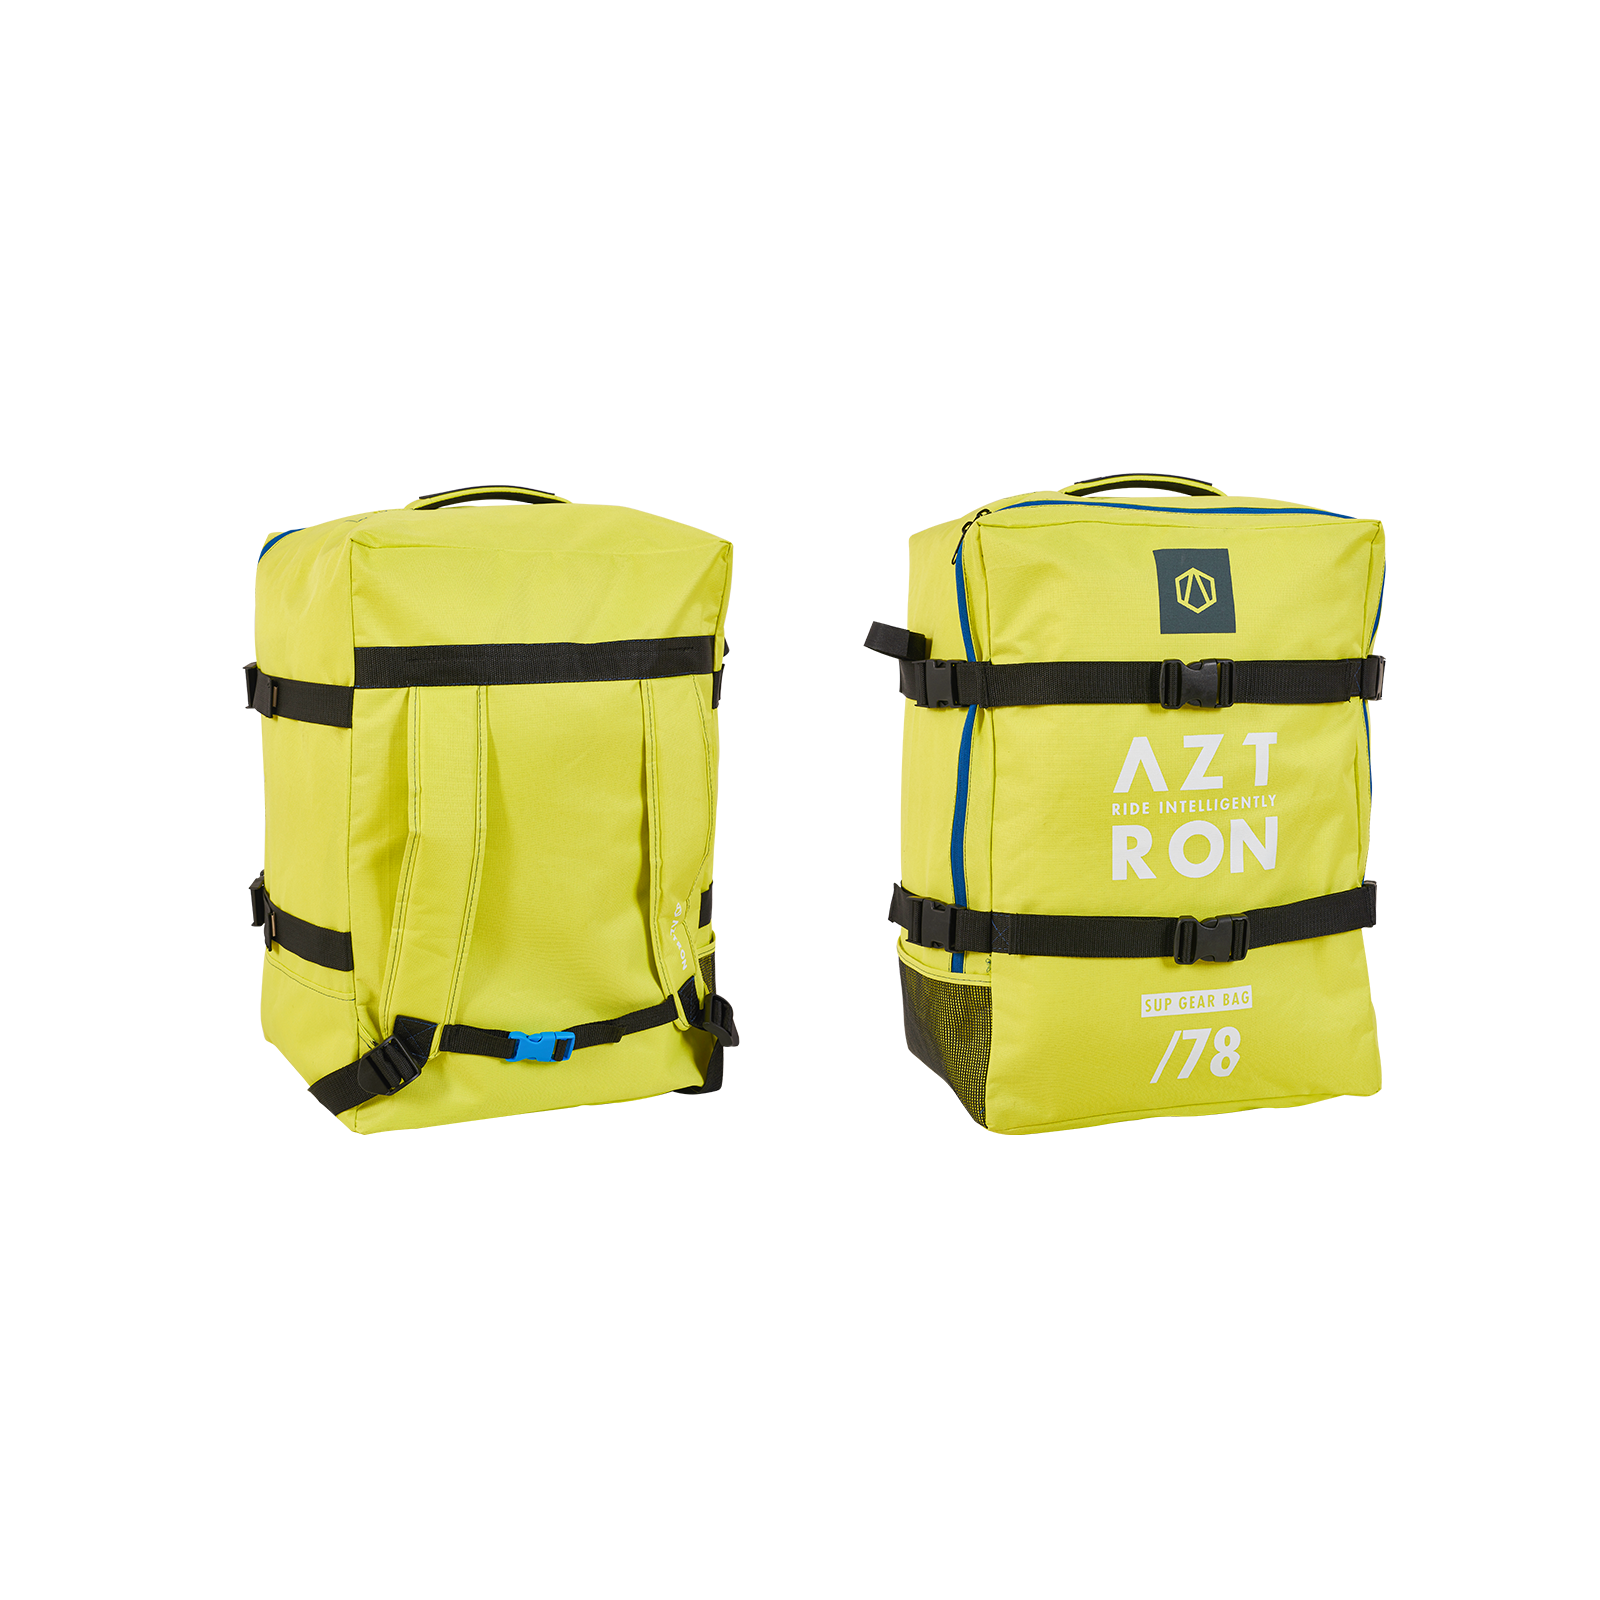 Aztron 78L SUP Bag